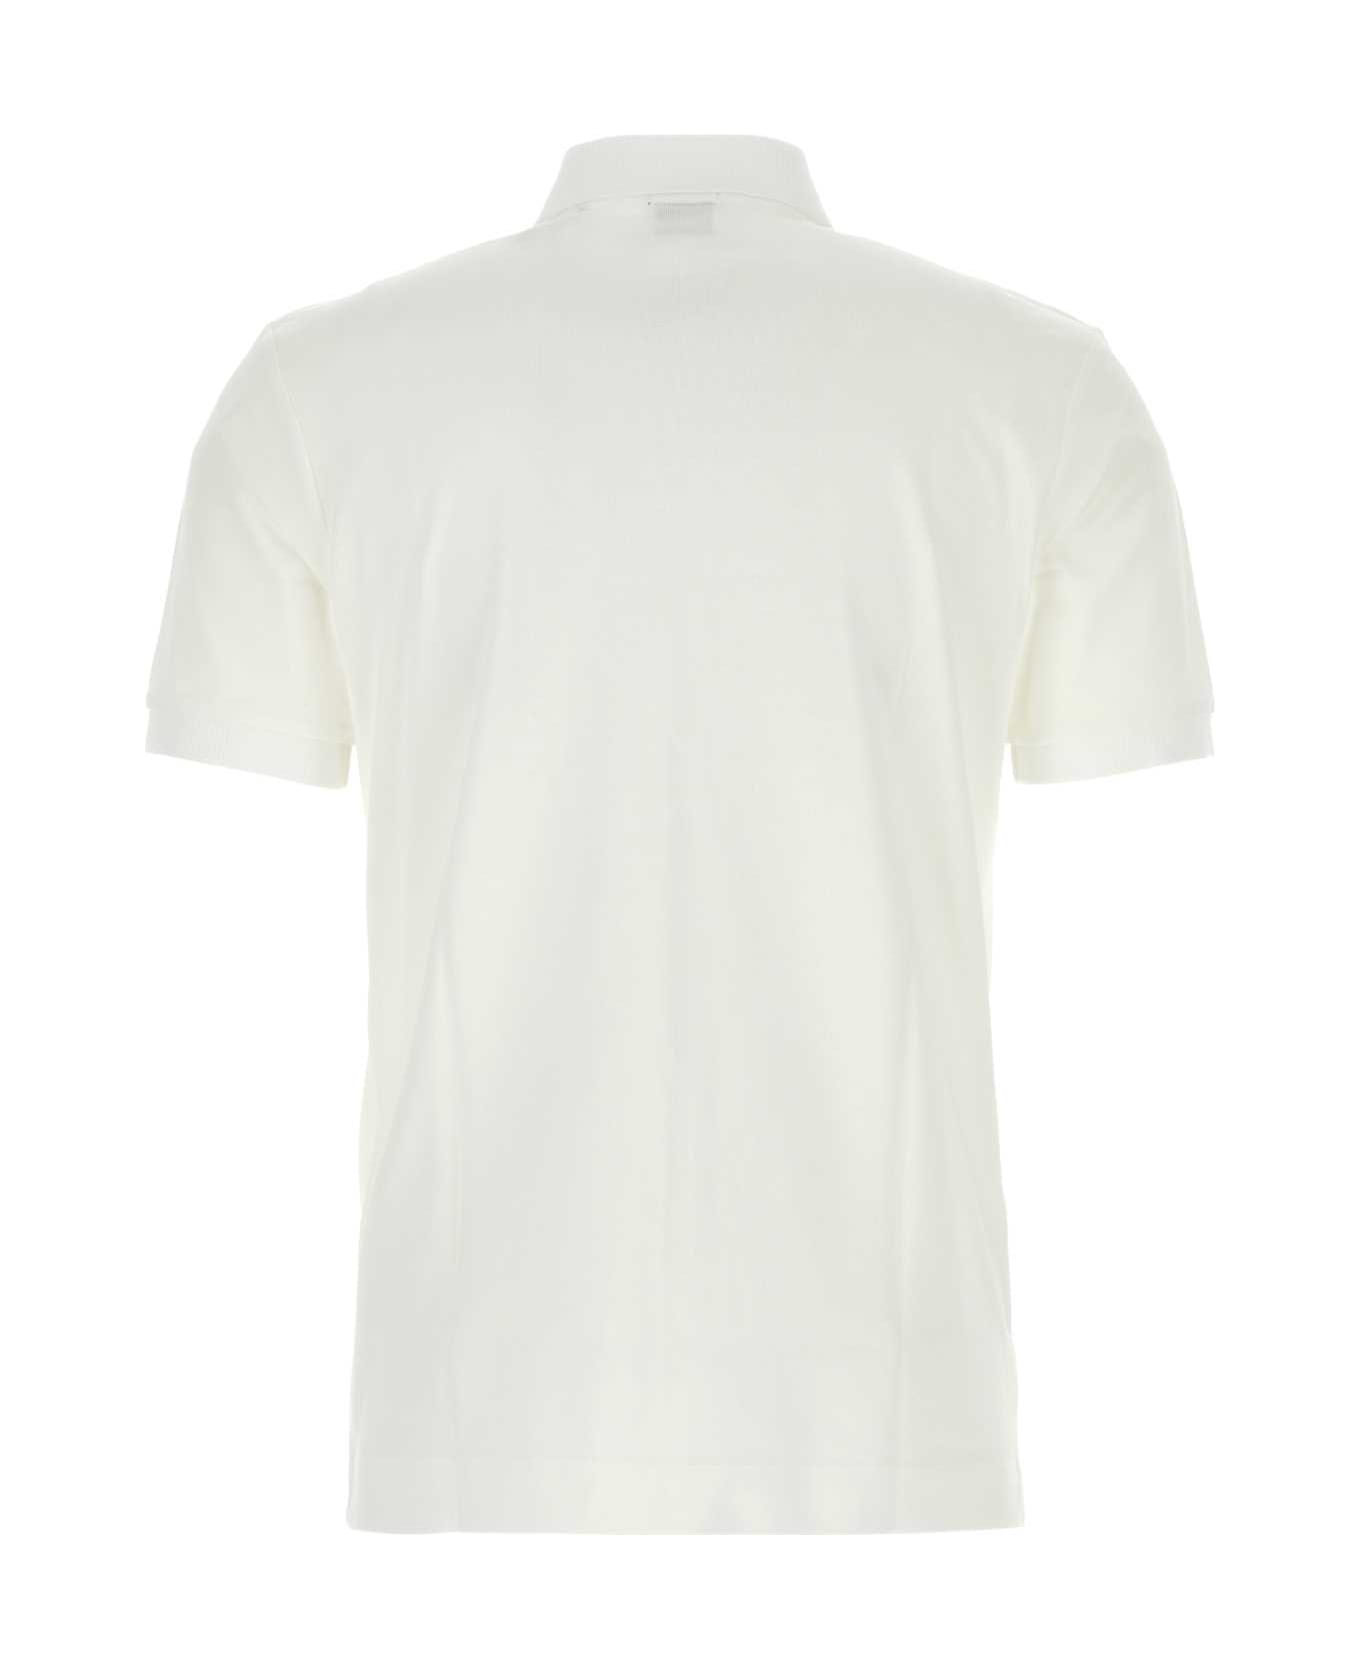 Hugo Boss White Piquet Polo Shirt - White ポロシャツ